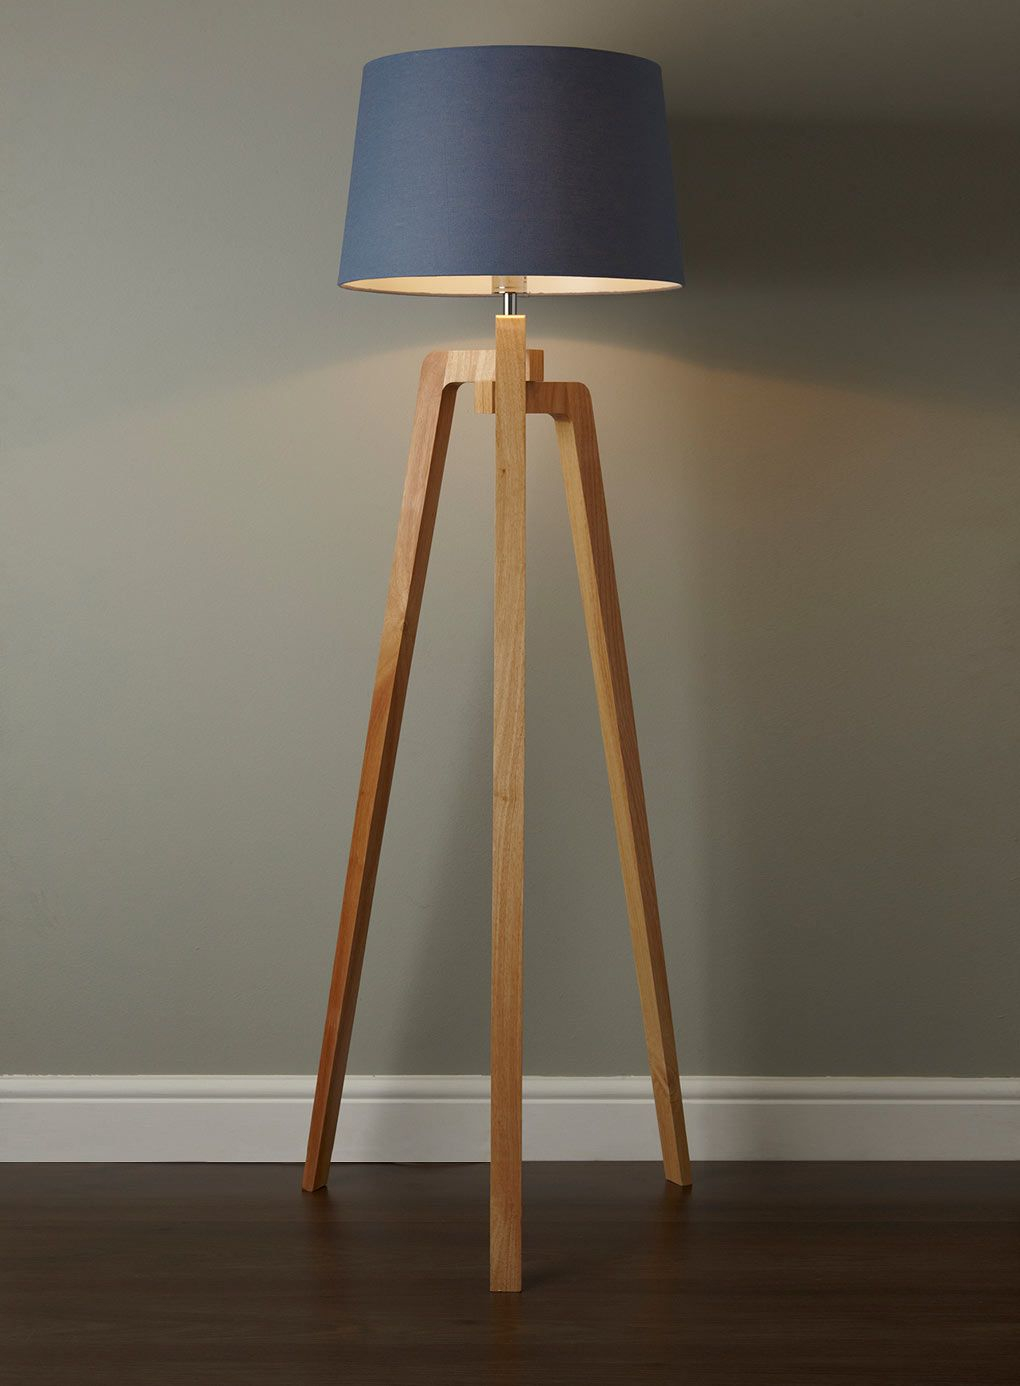 Co Wooden Tripod Floor Lamp Bhs In 2019 Wooden Floor inside sizing 1020 X 1386